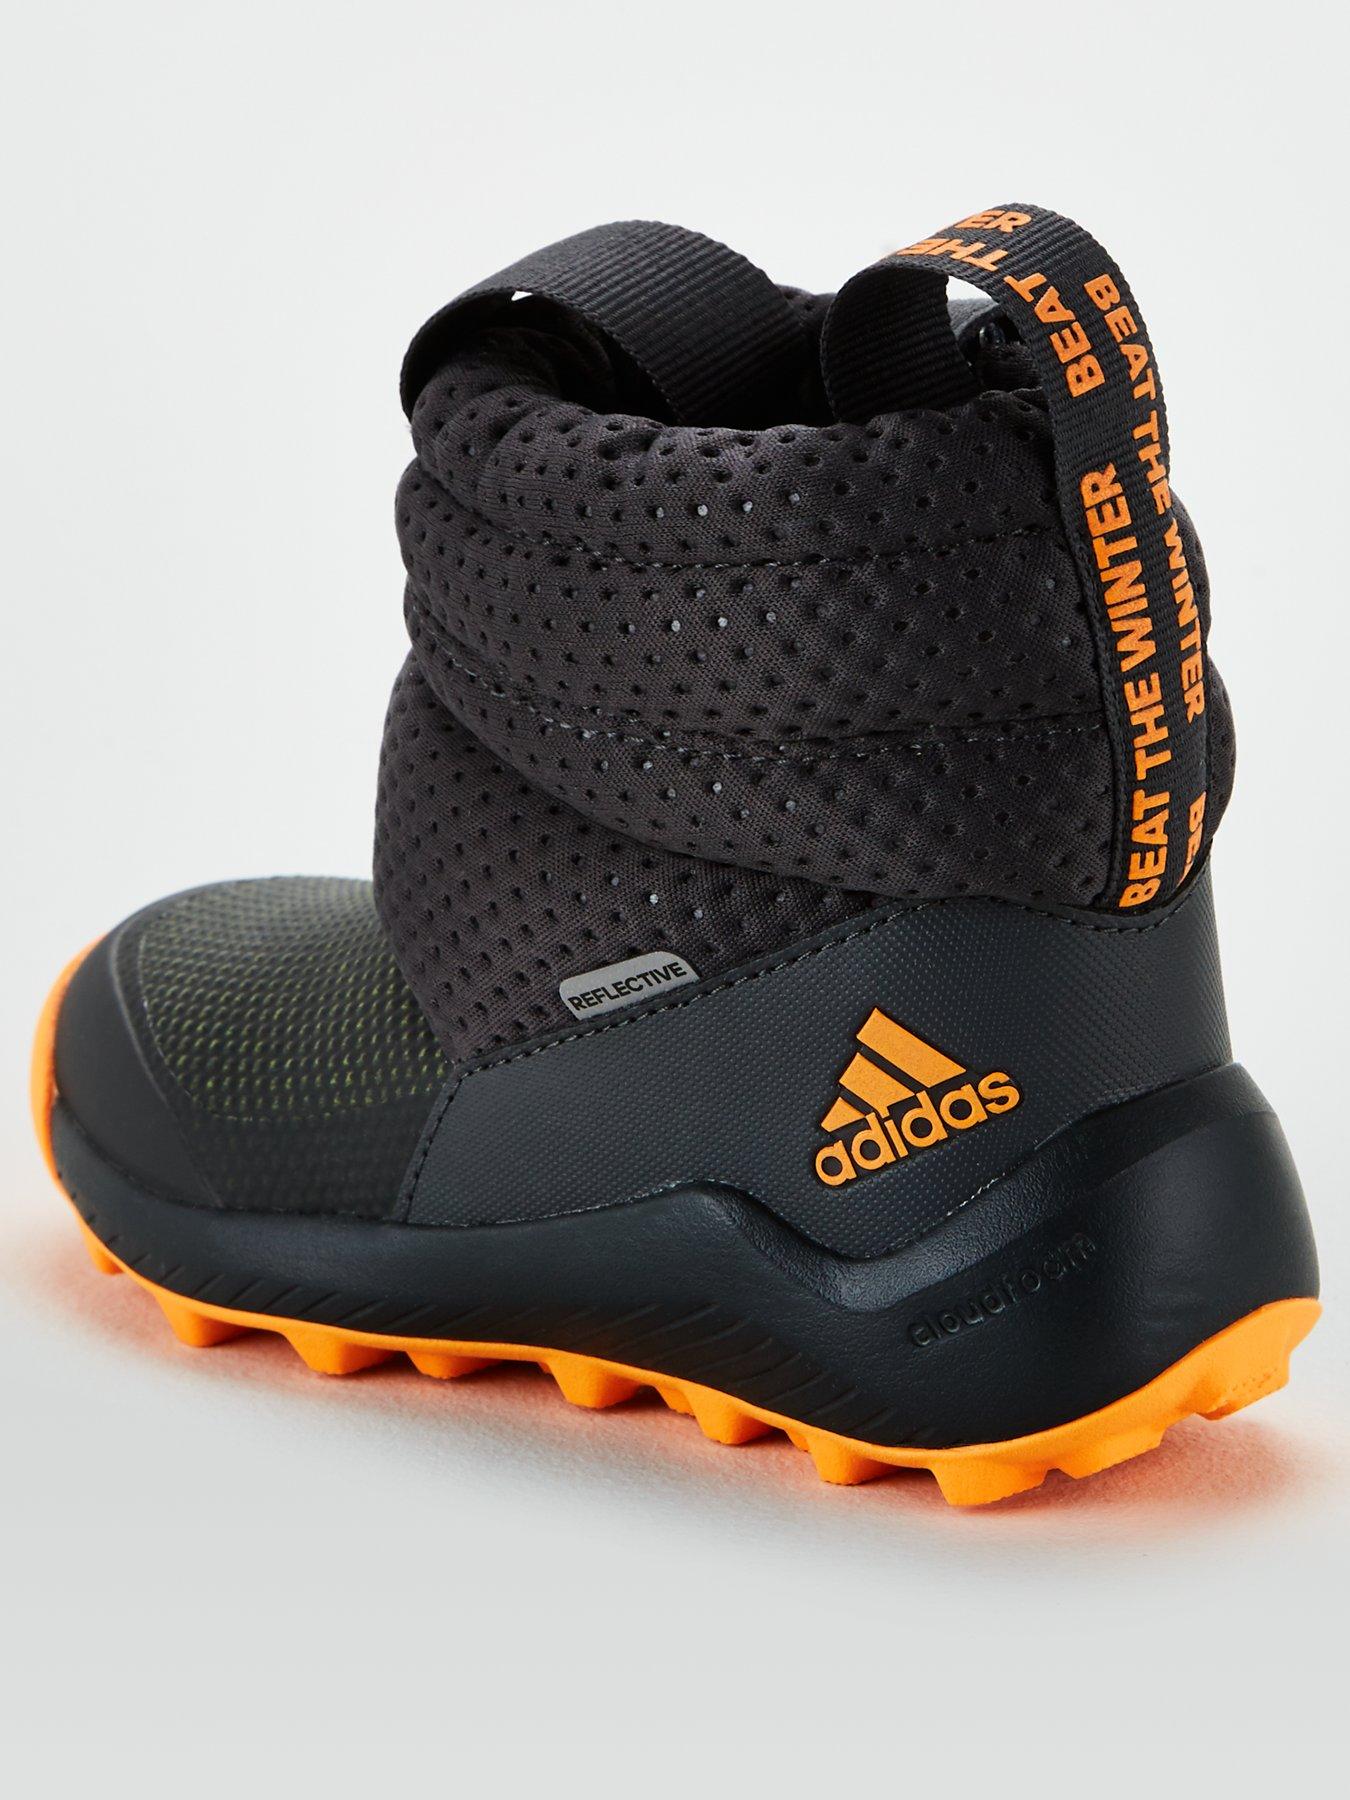 adidas rapidasnow boots